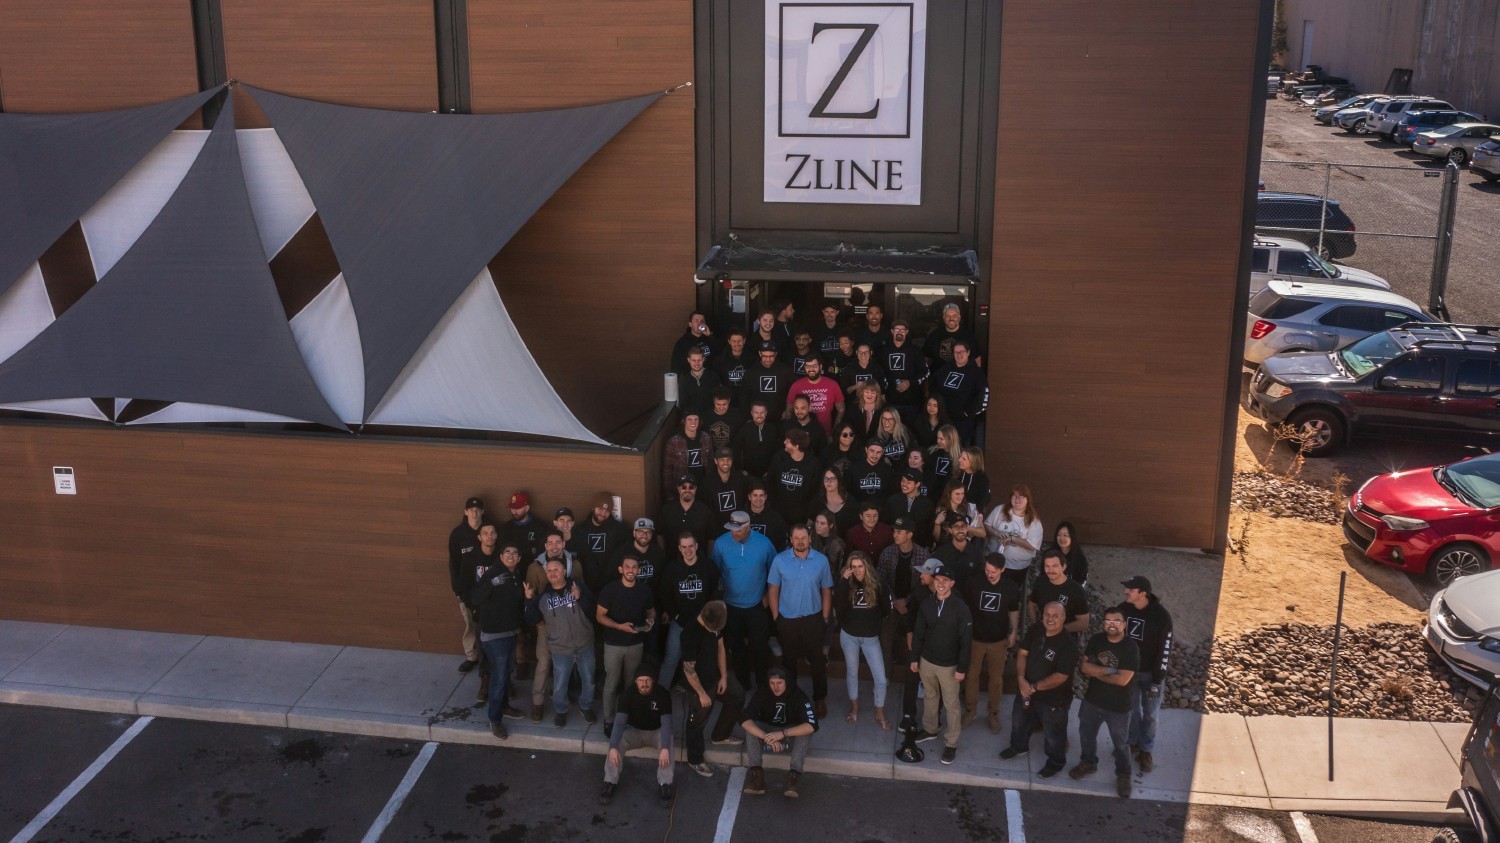 Meet some of the ZLINE Team!